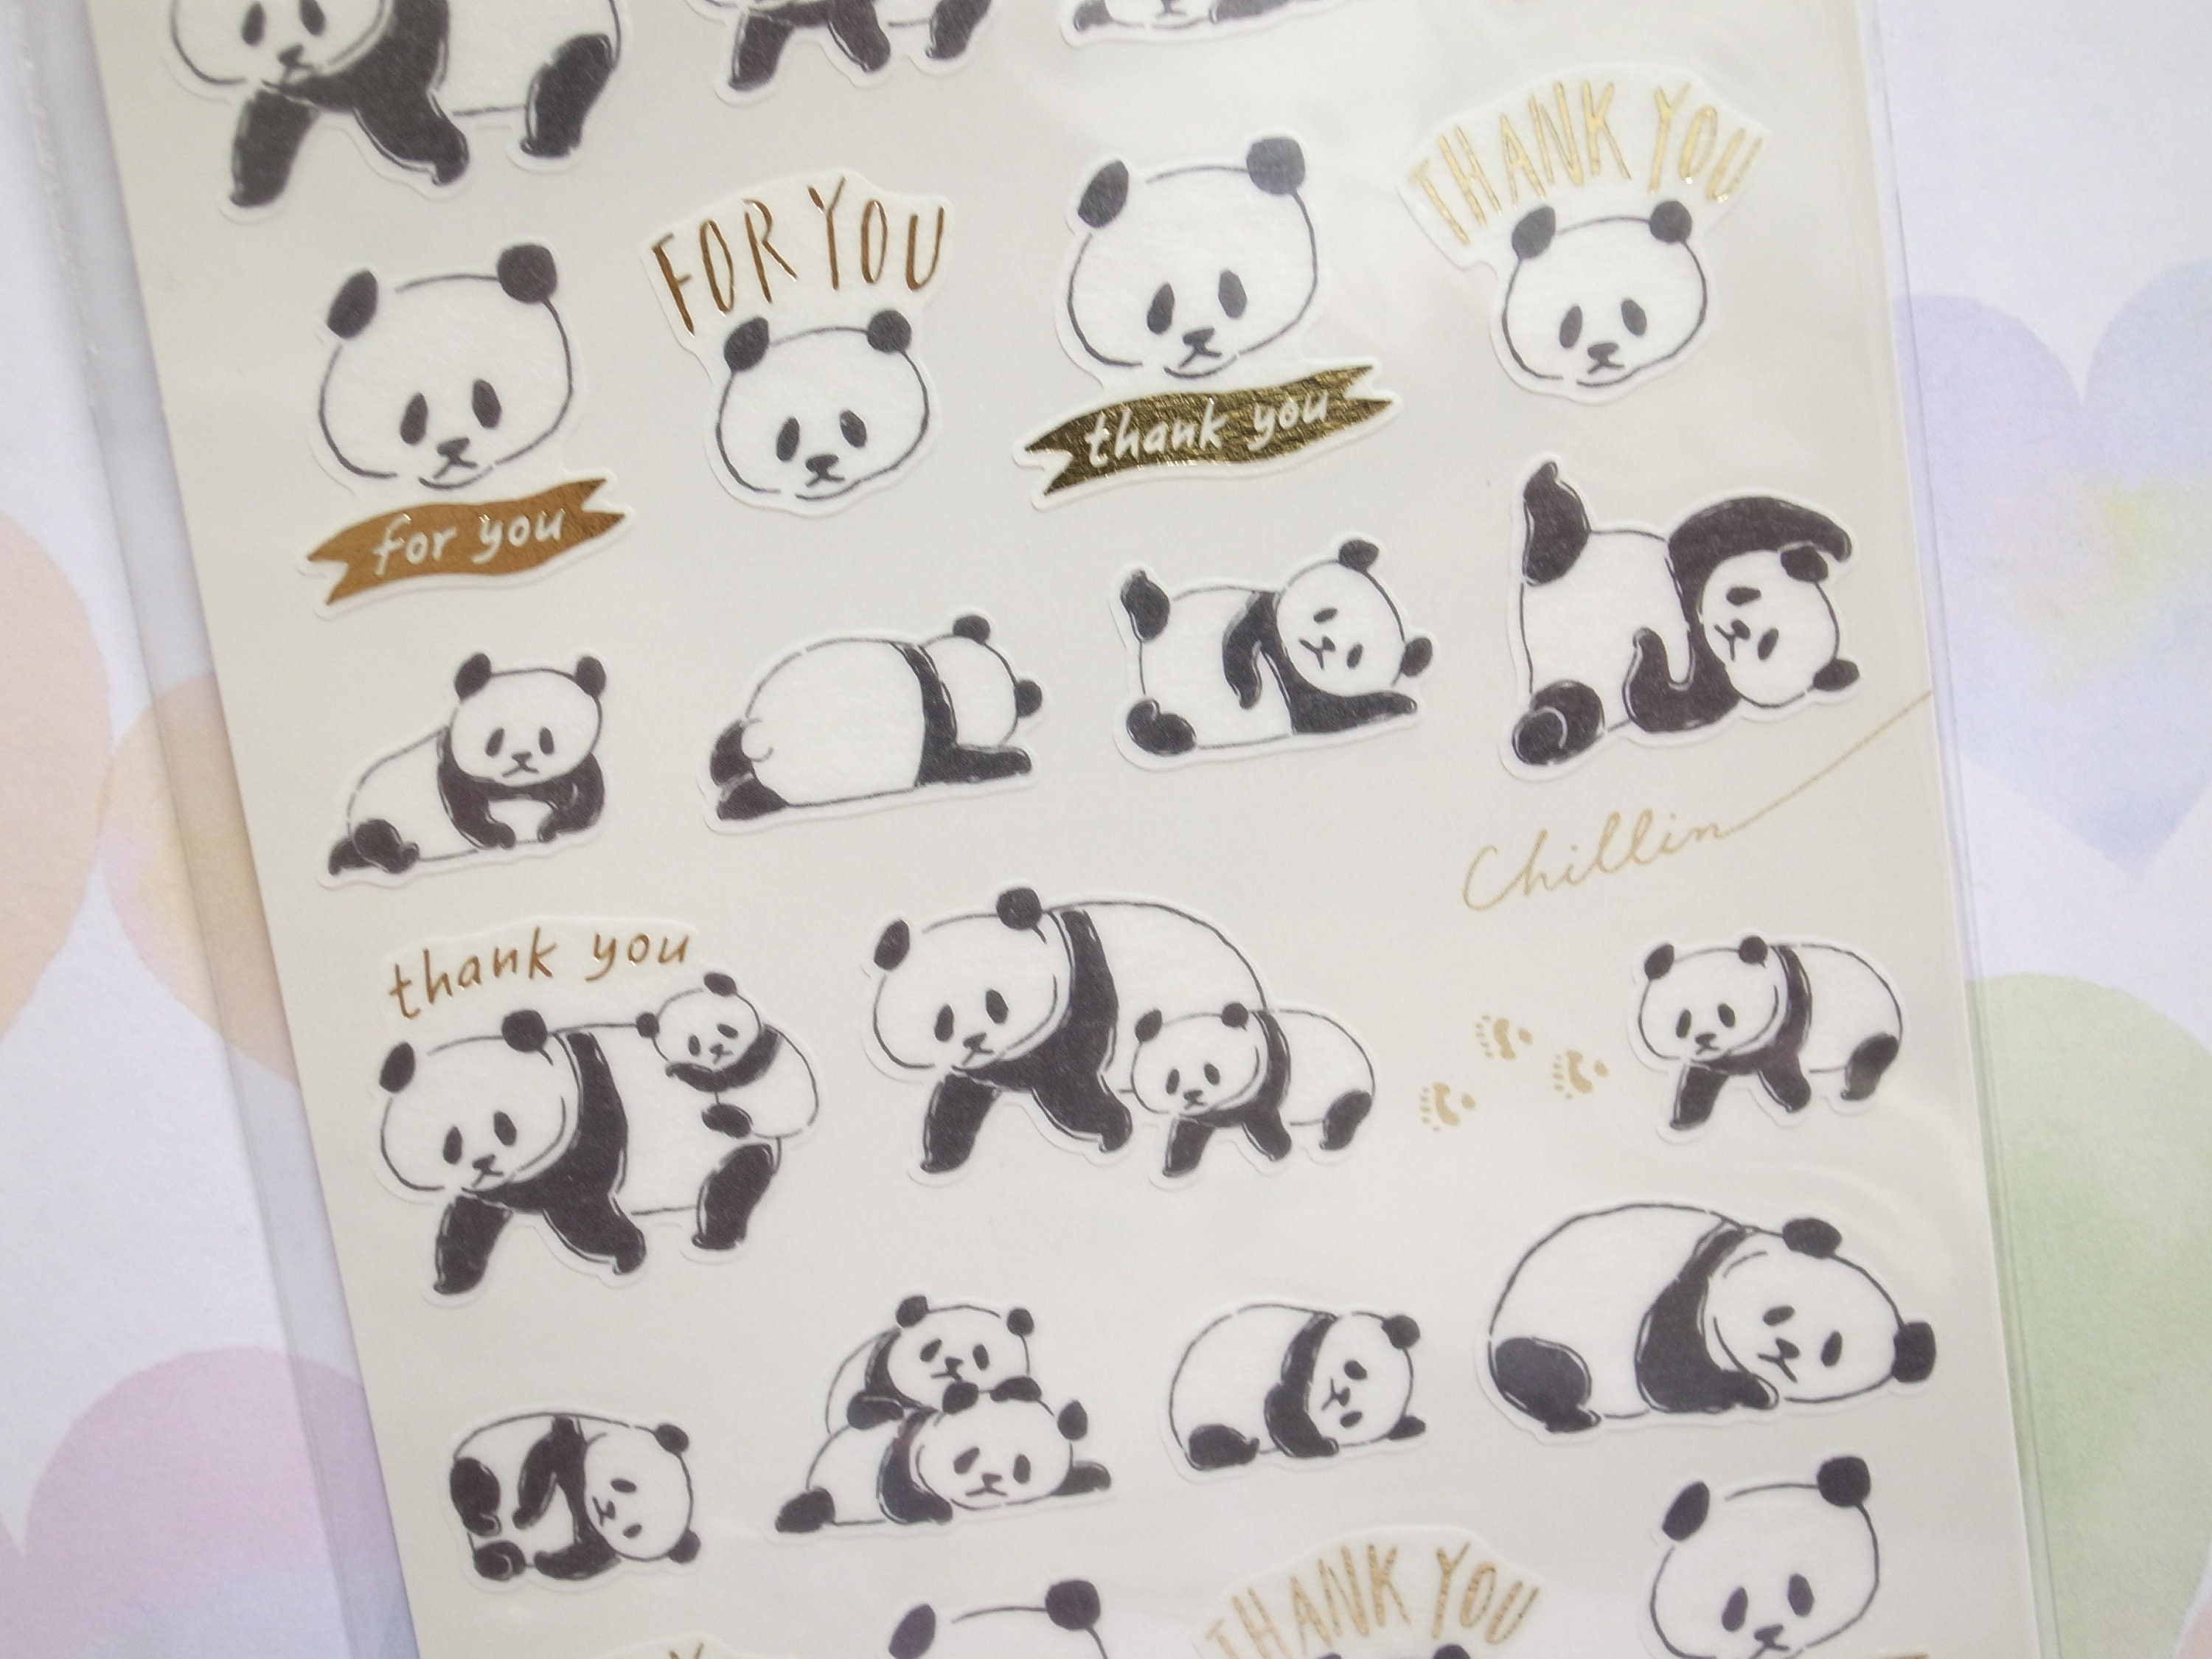 San-X Sumikko Gurashi Stickers Seal Book 2 (450) Japan